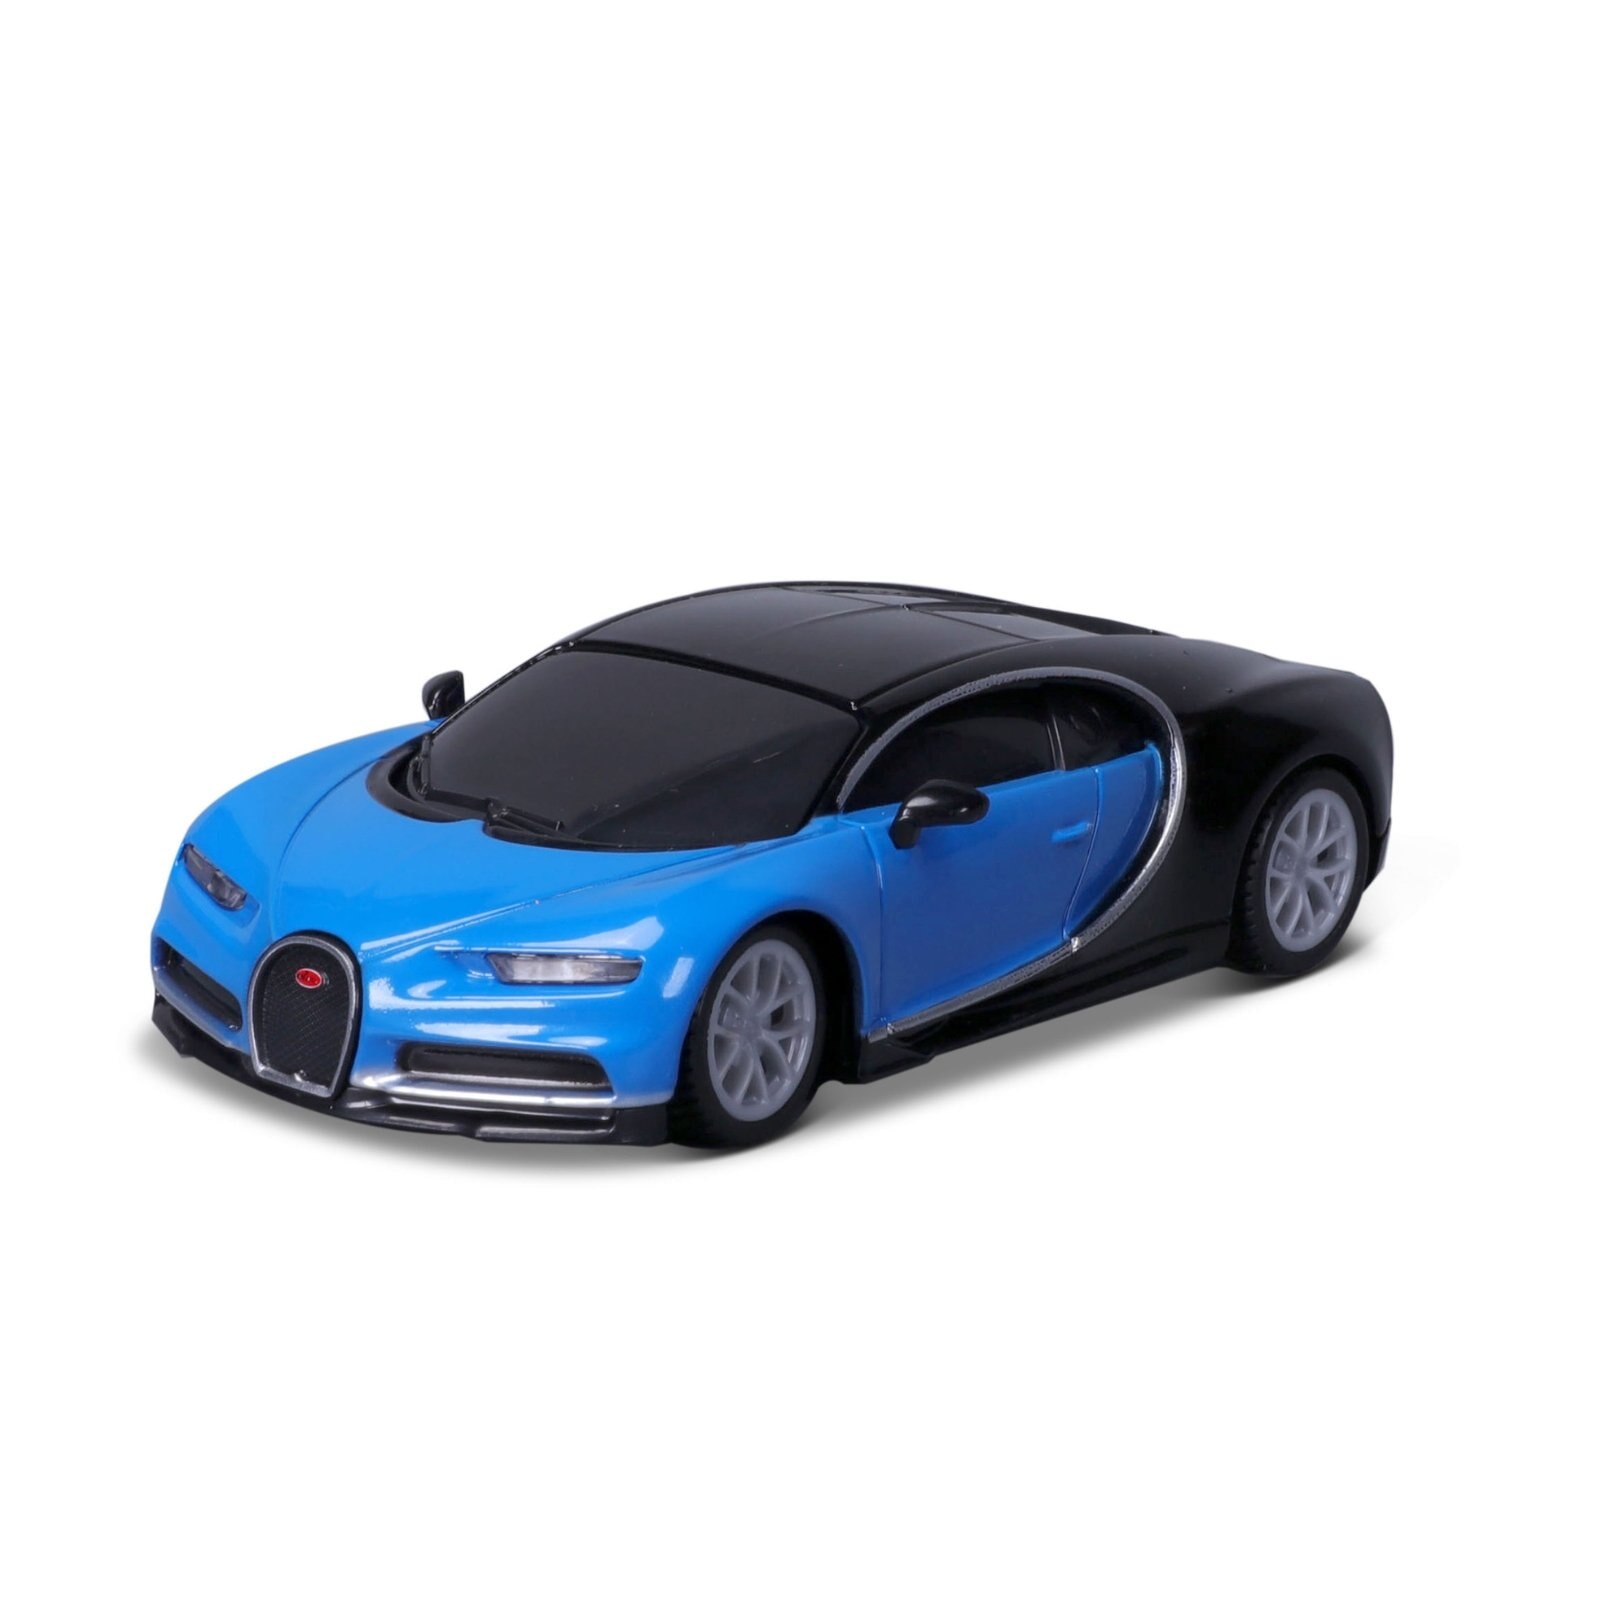 Bugatti Chiron Toy 1:41 scale Blue/Black Maisto